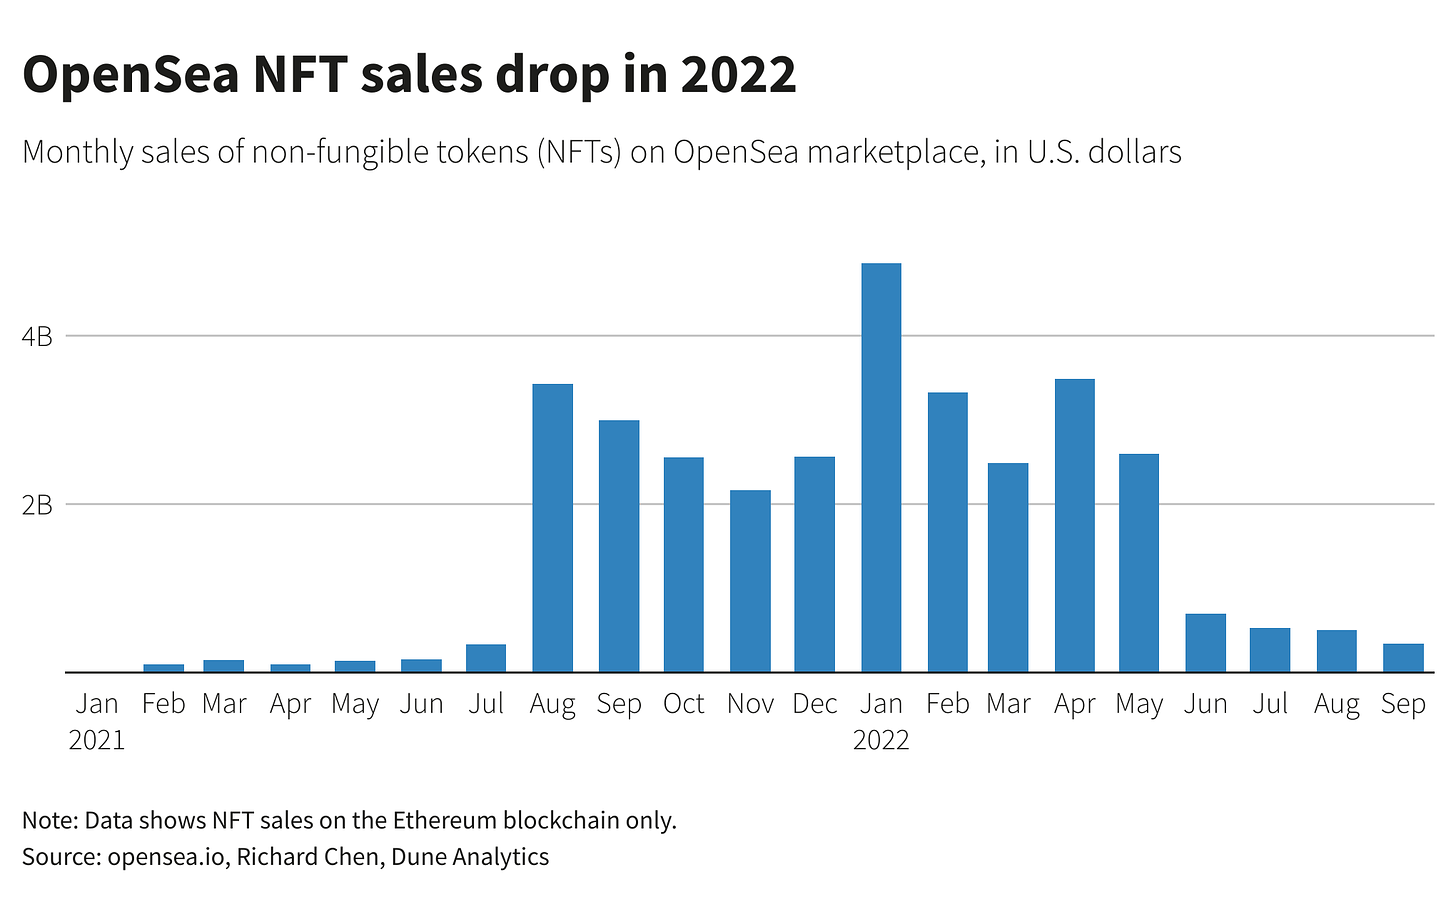 OpenSea NFT sales